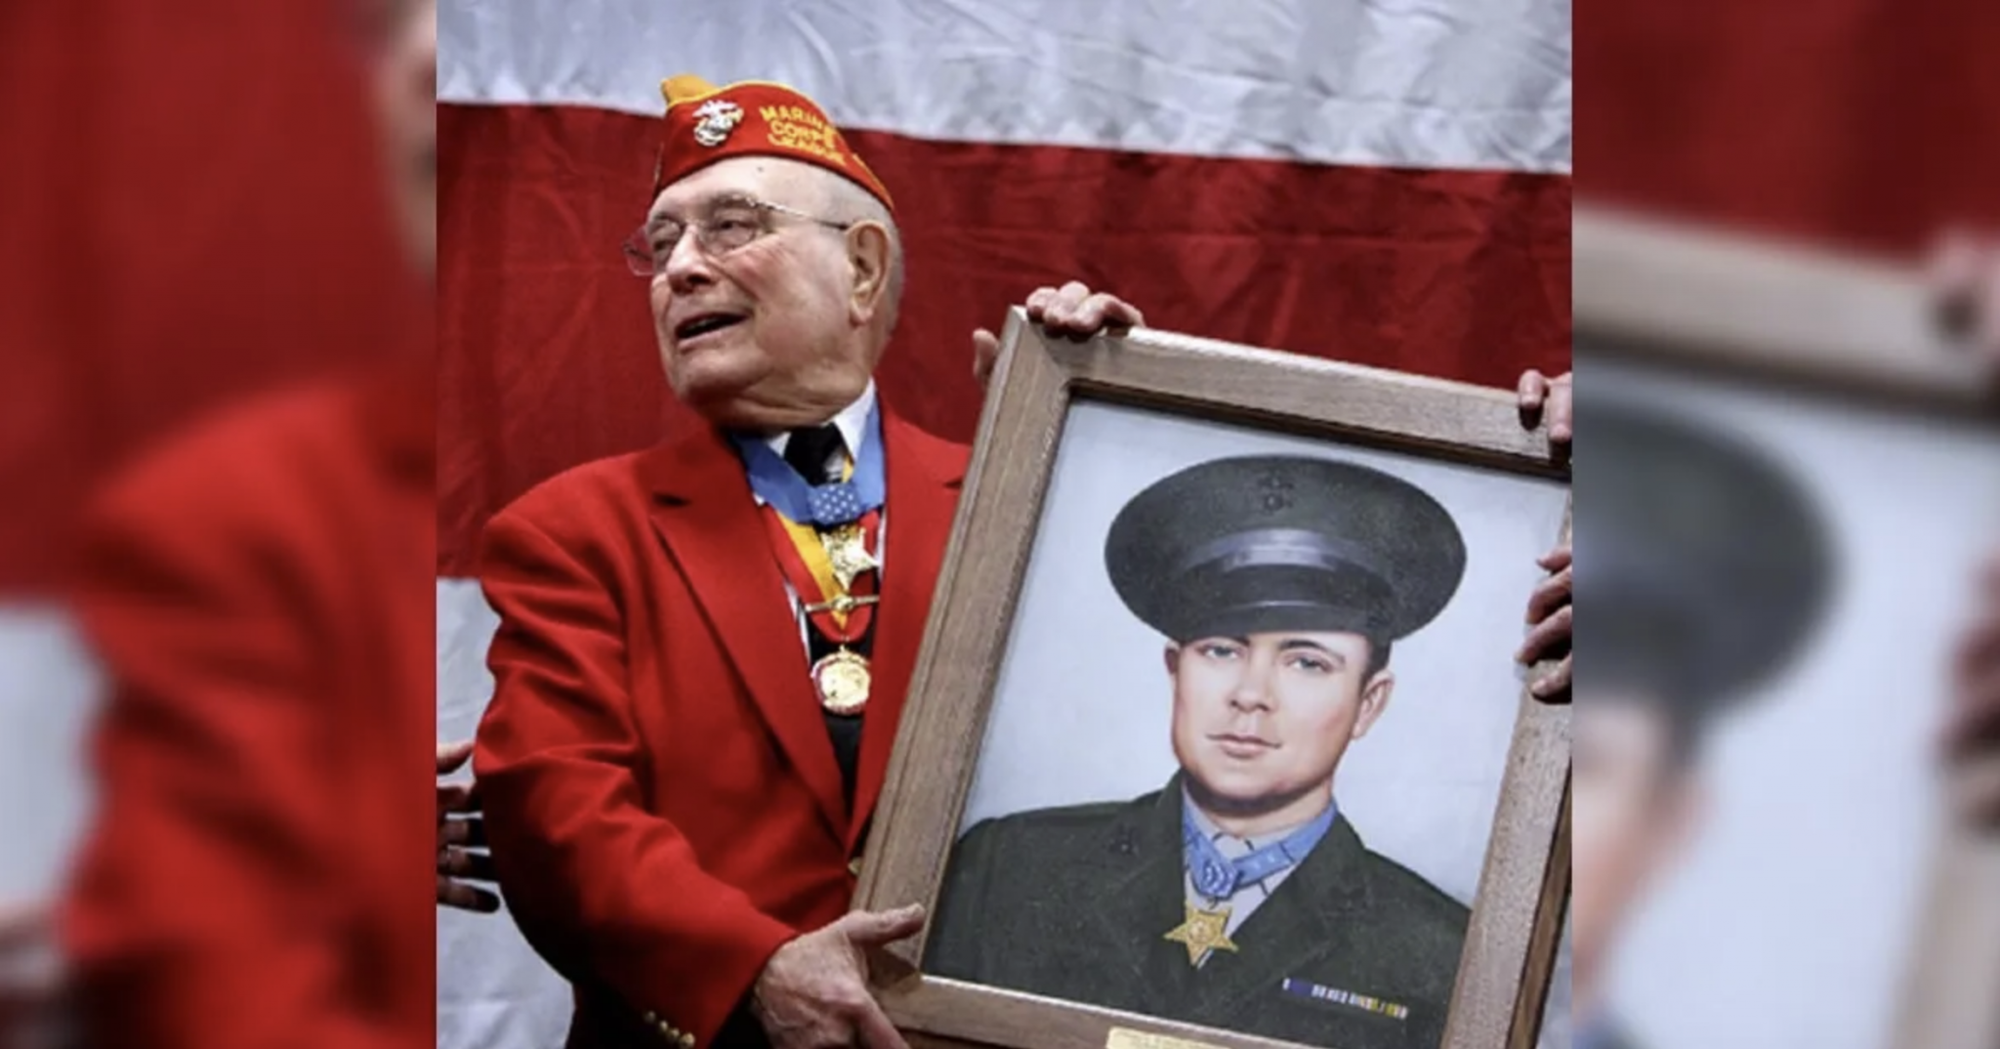 Medal of honor recipient and US Marine Corps veteran Herschel "Woody" Williams